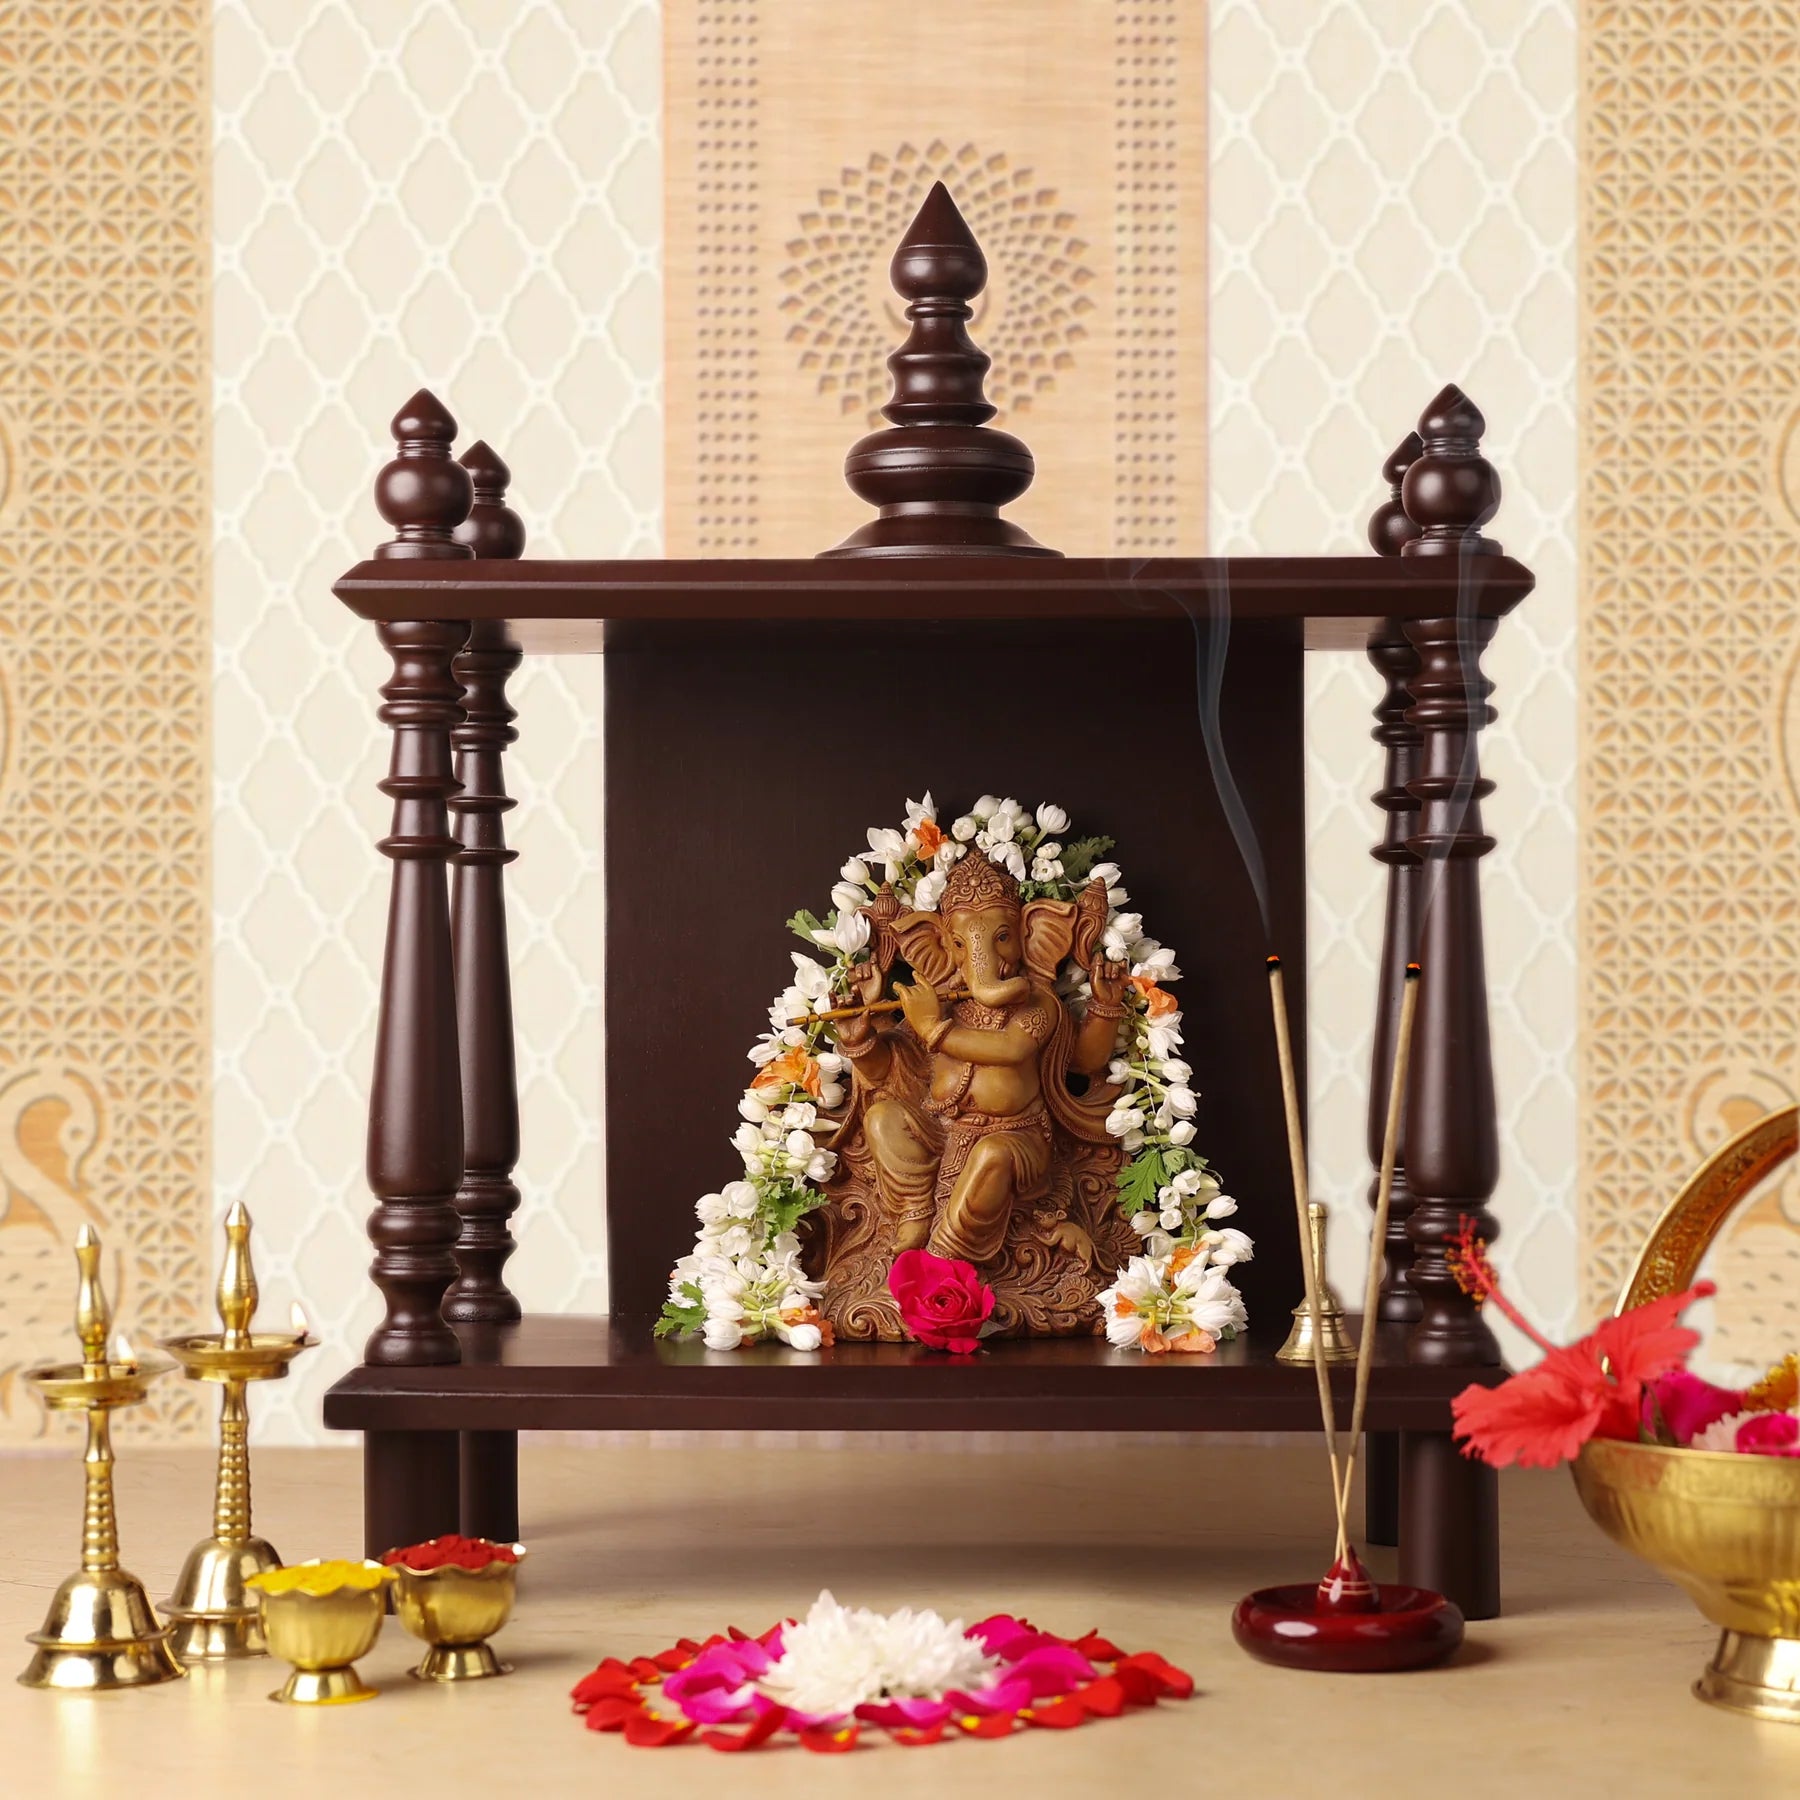 Mantapa in Hindu puja rooms